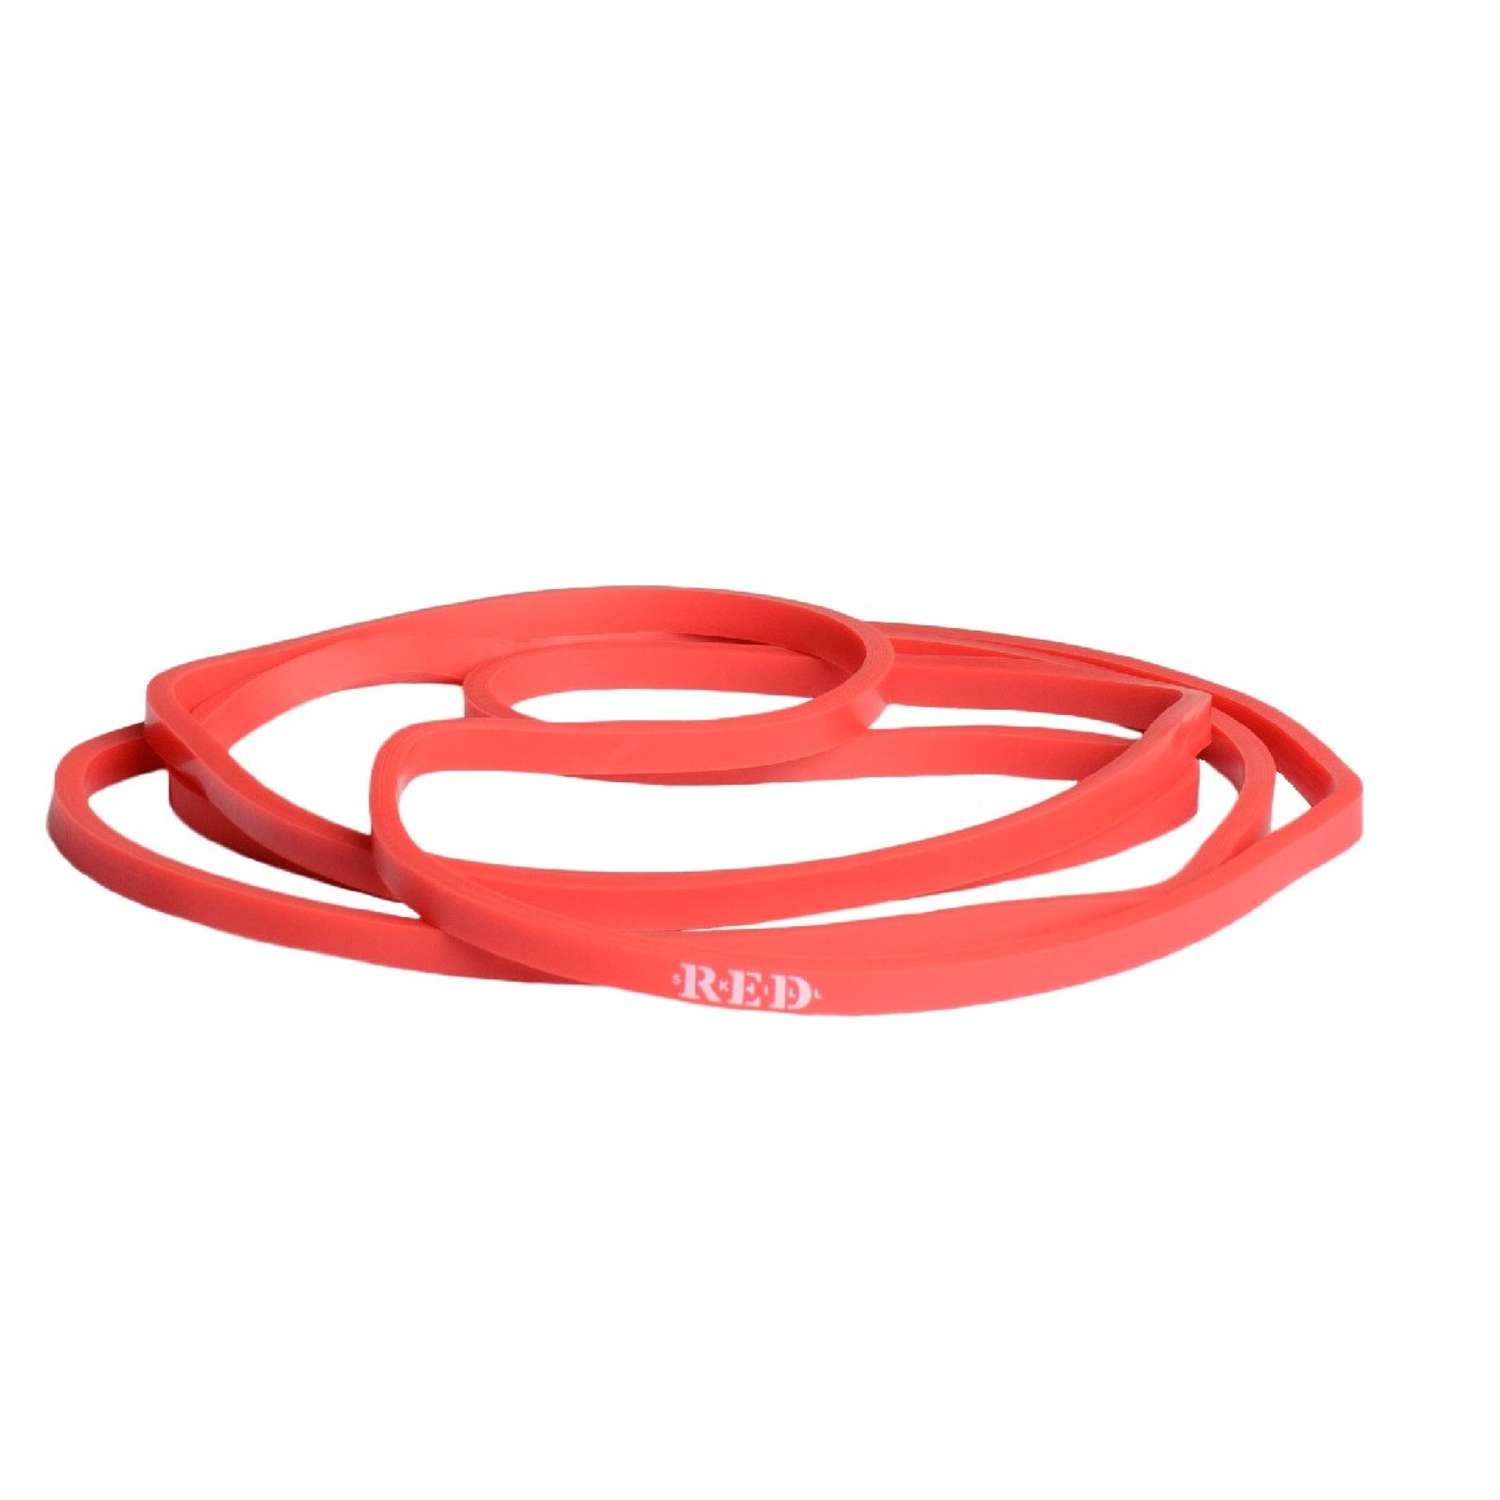 Резиновая петля для фитнеса RED Skill 2-7 кг - фото 2